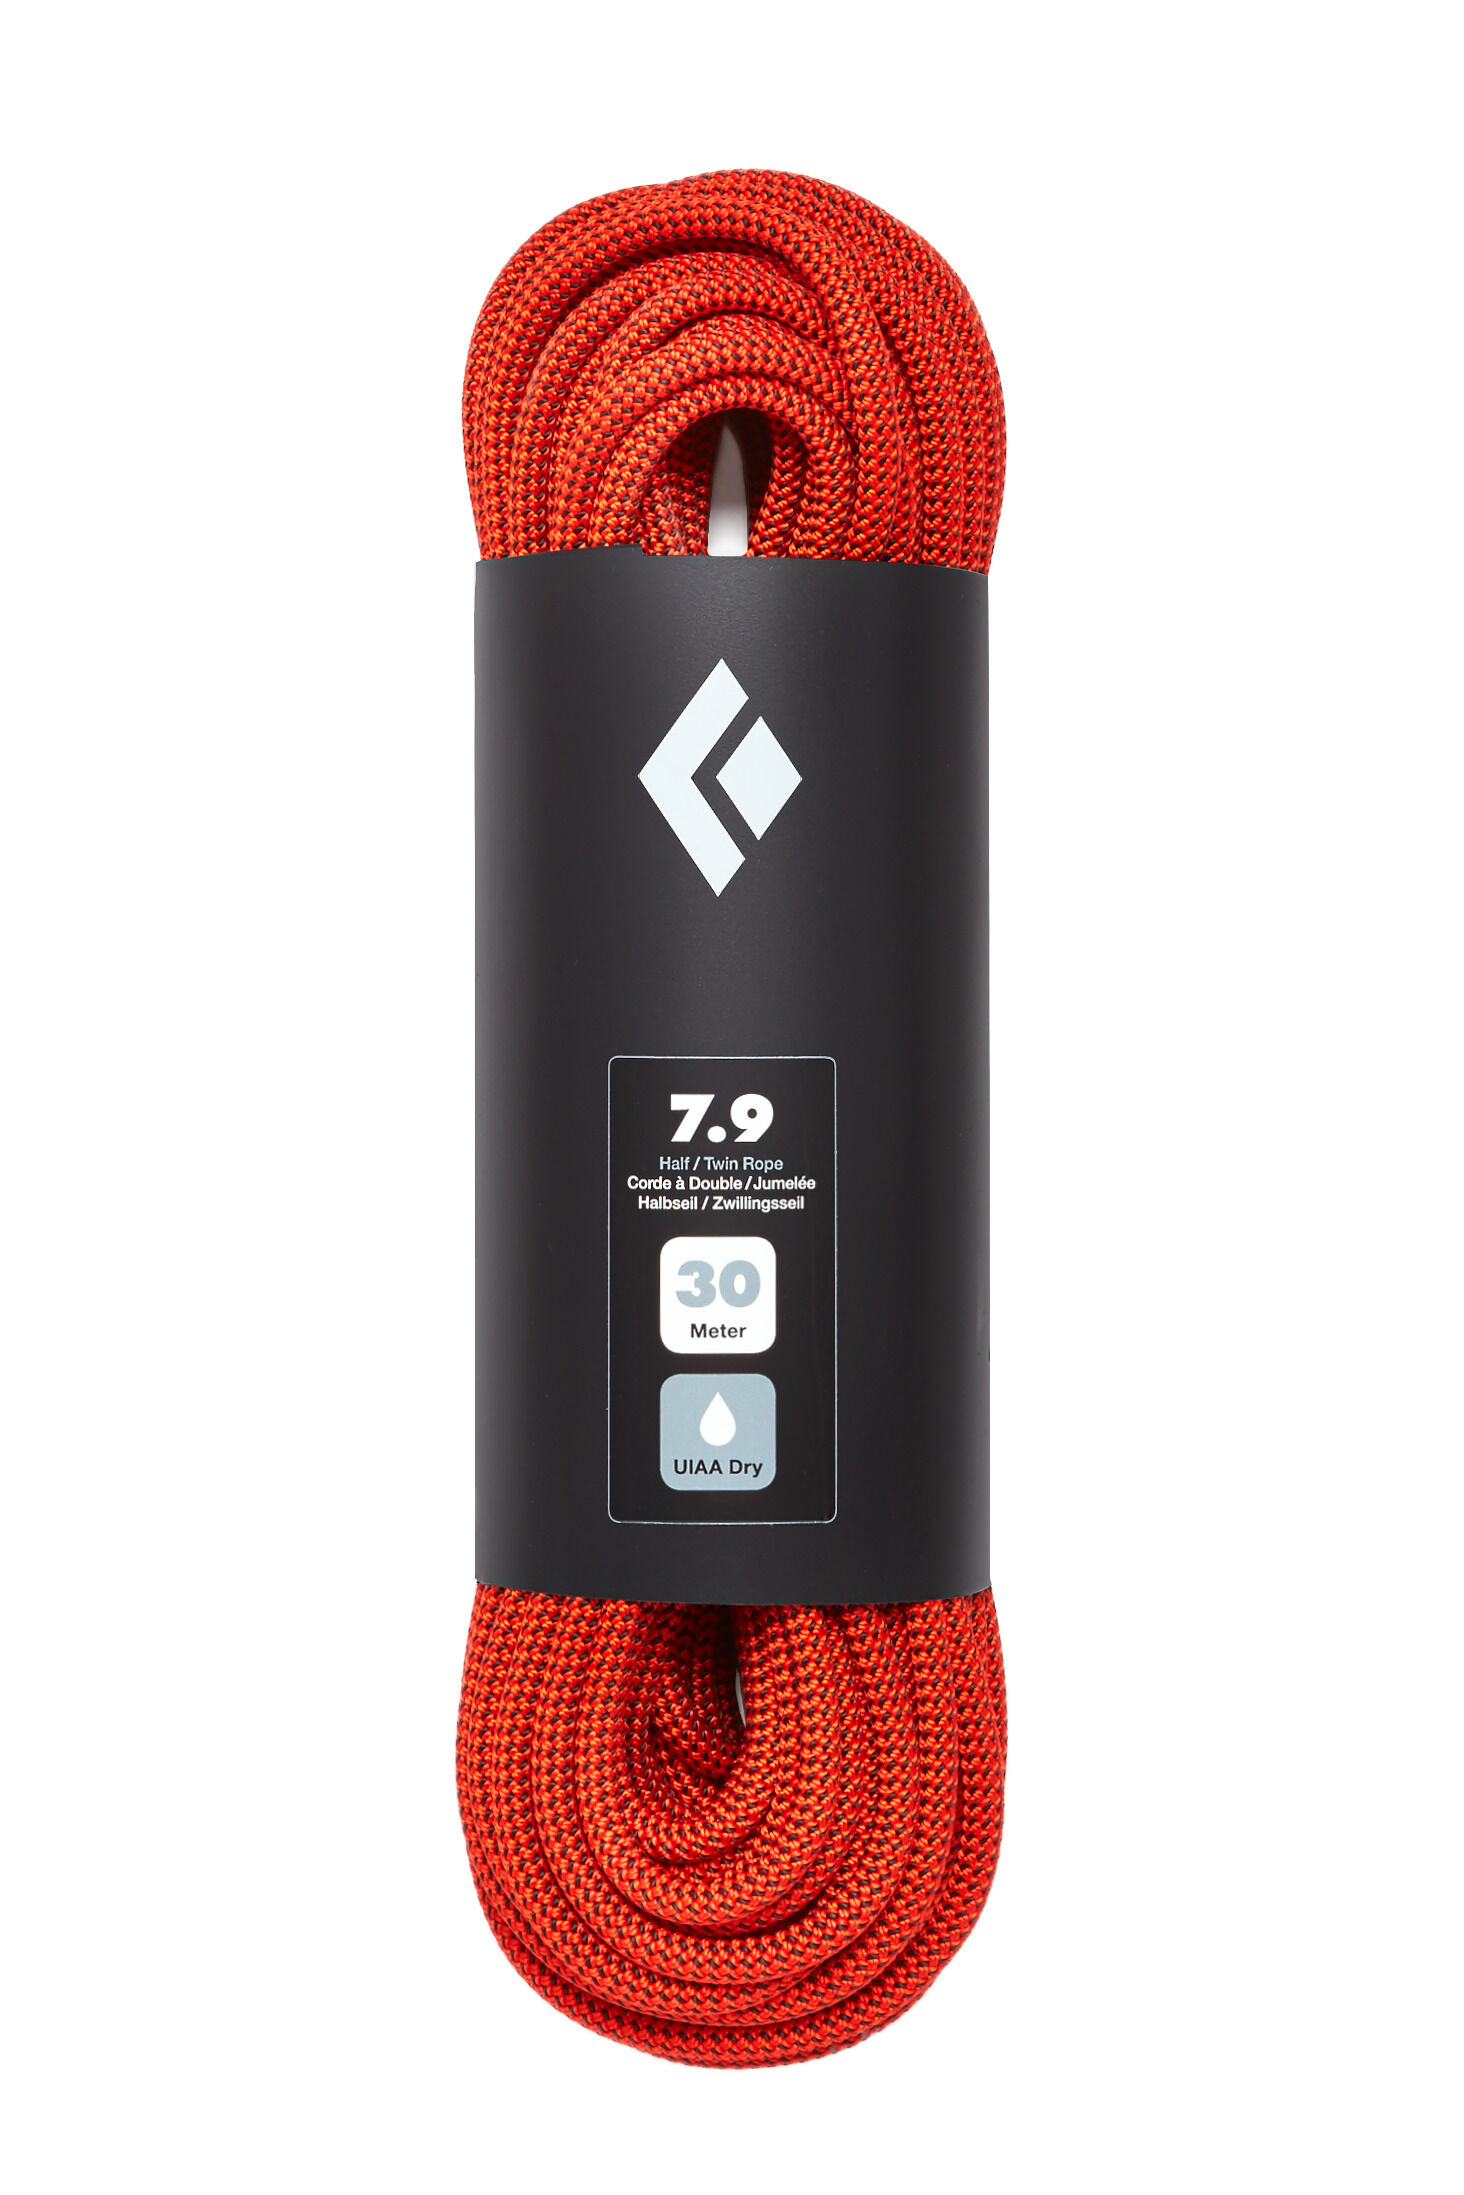 Black Diamond - 7.9 Rope - Dry - Corda da arrampicata